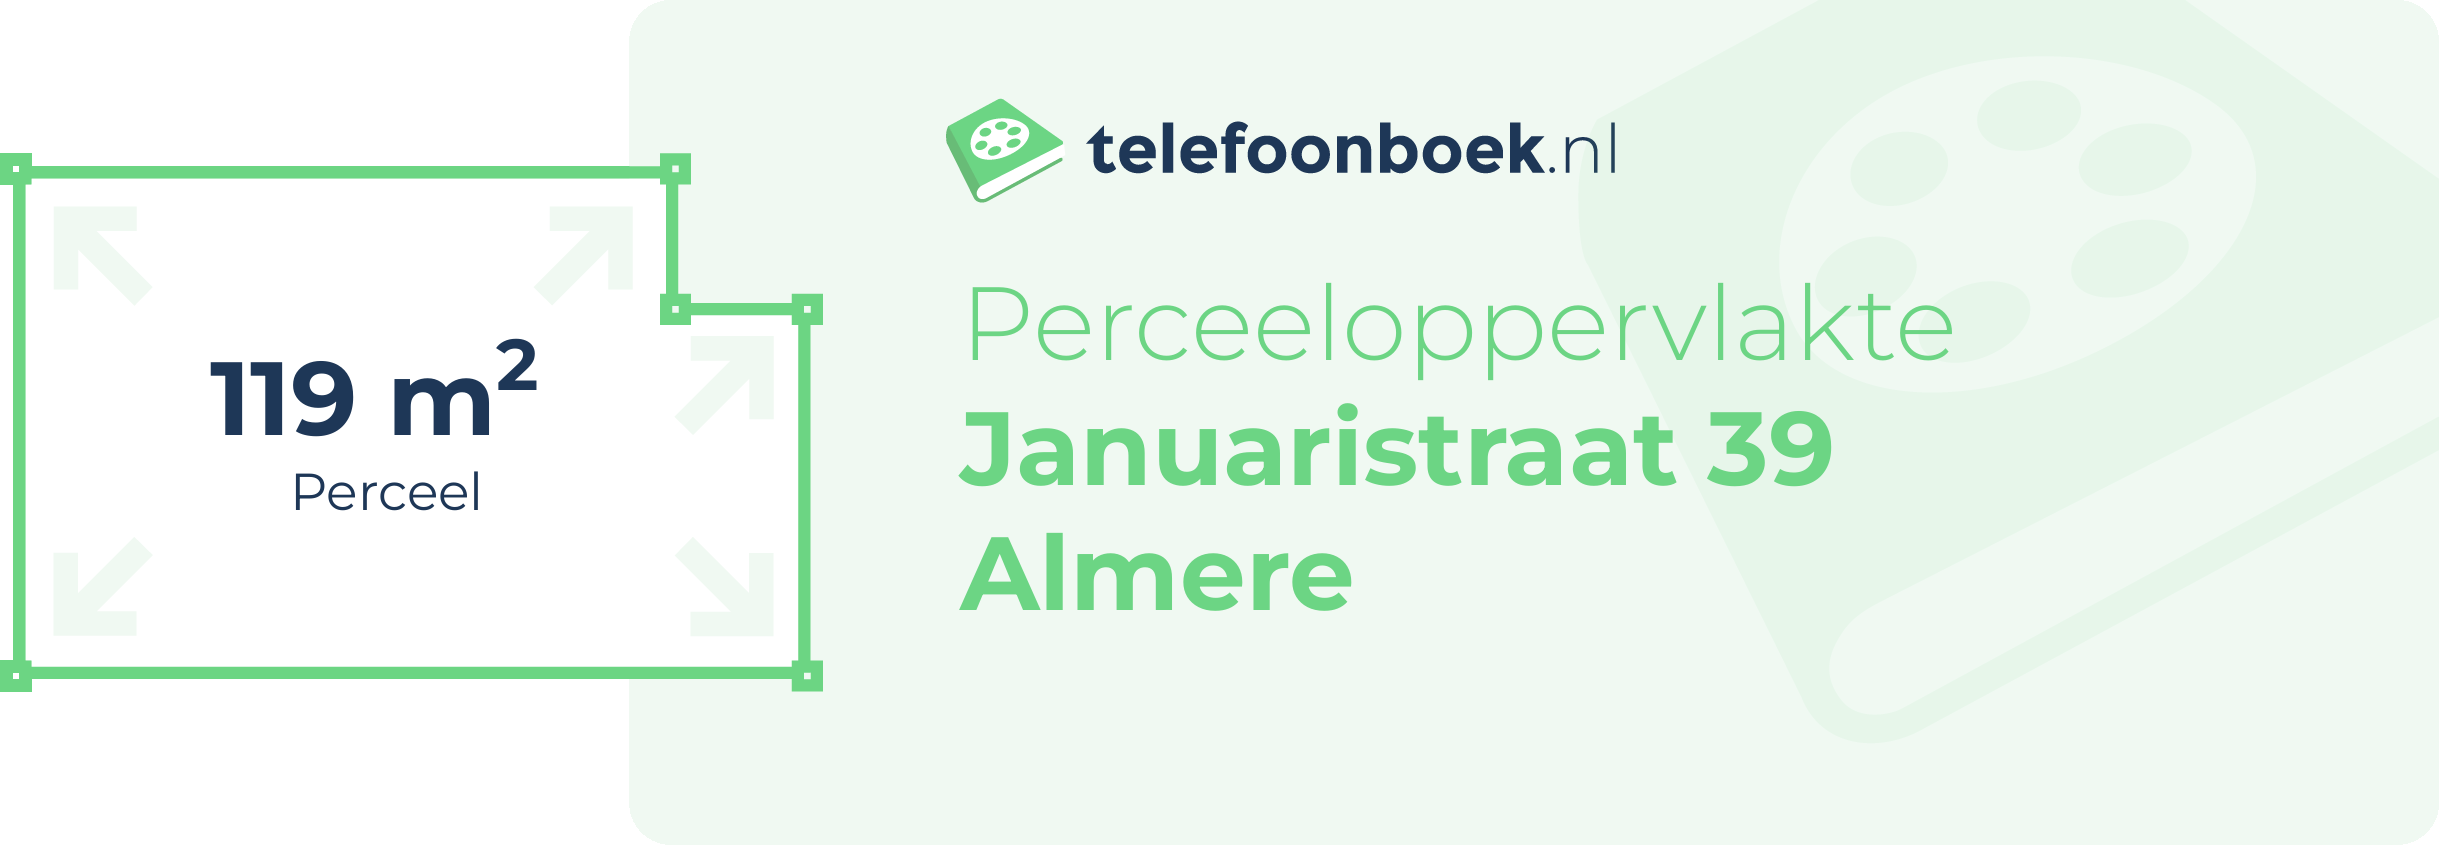 Perceeloppervlakte Januaristraat 39 Almere